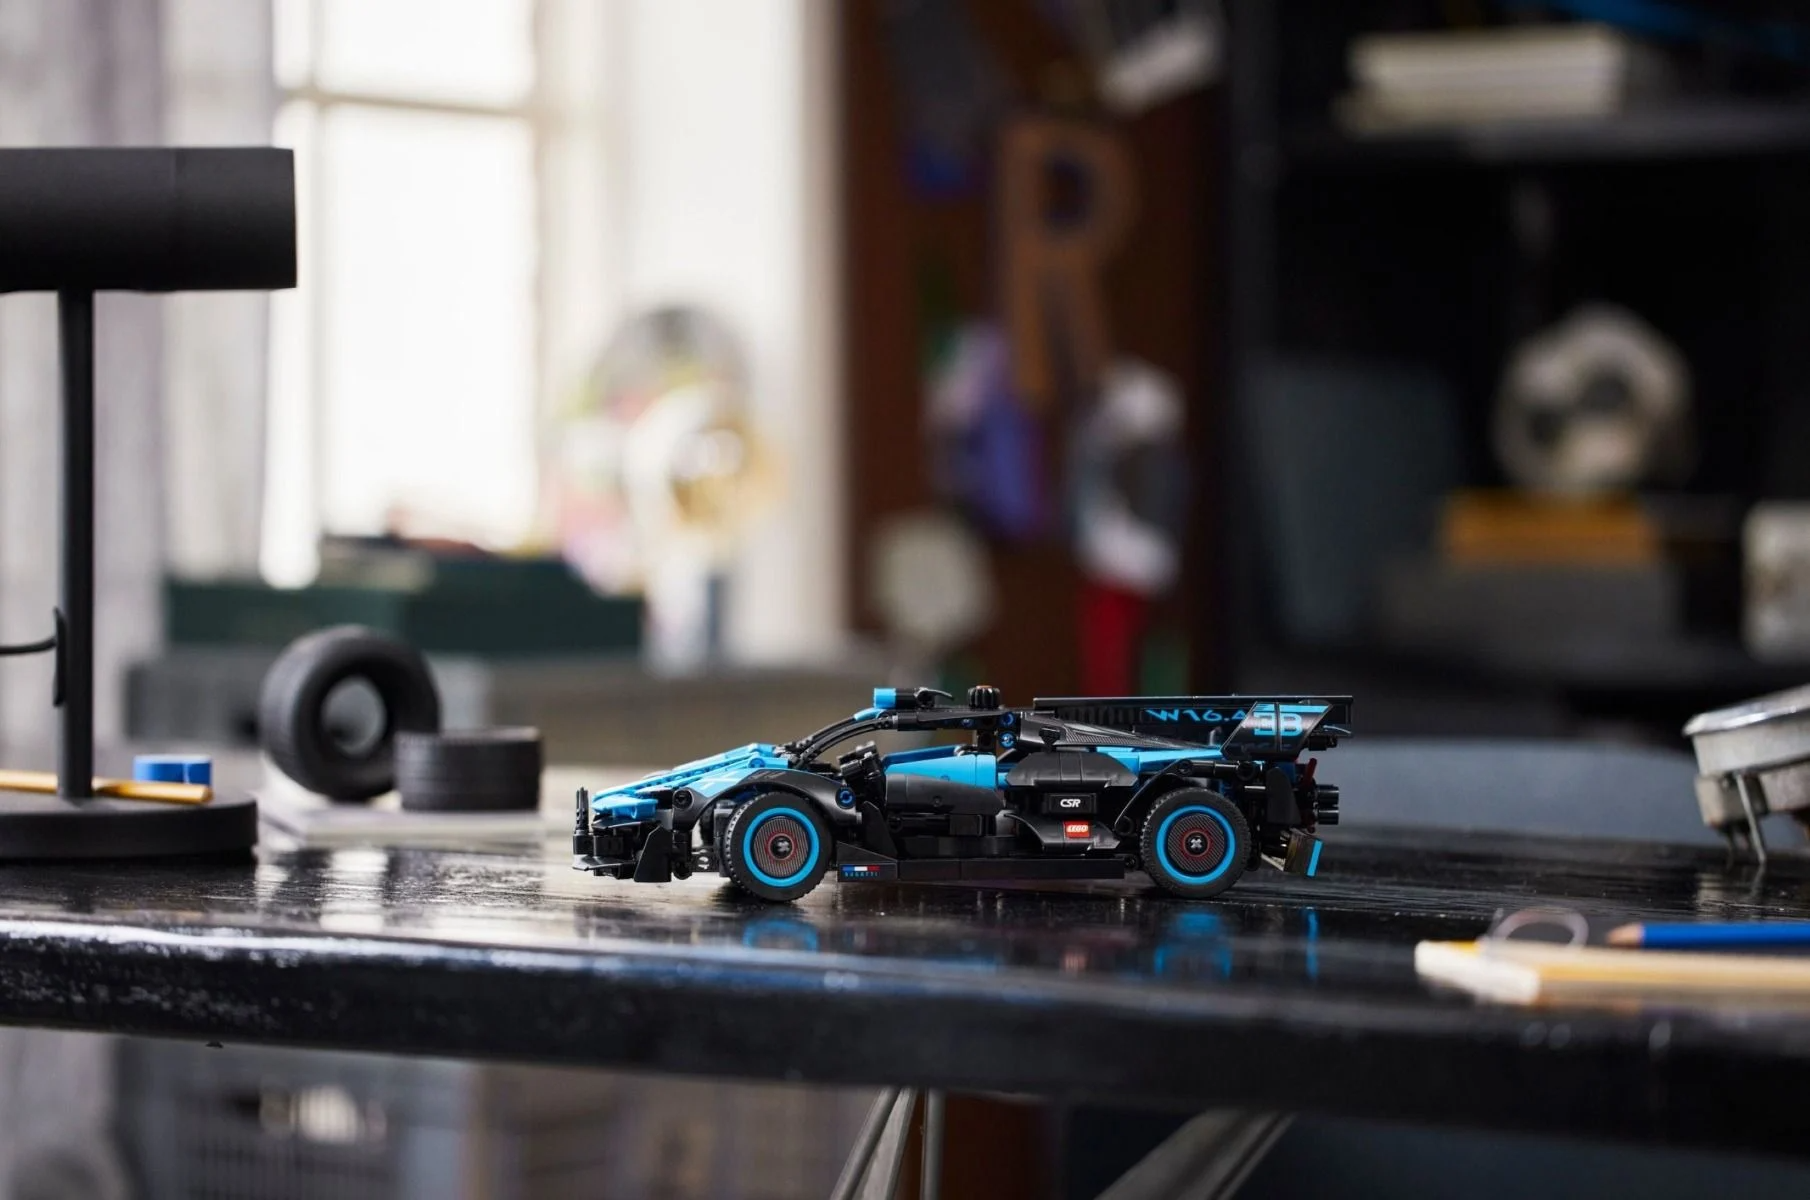 LEGO Technic Bugatti Bolide Agile Blue